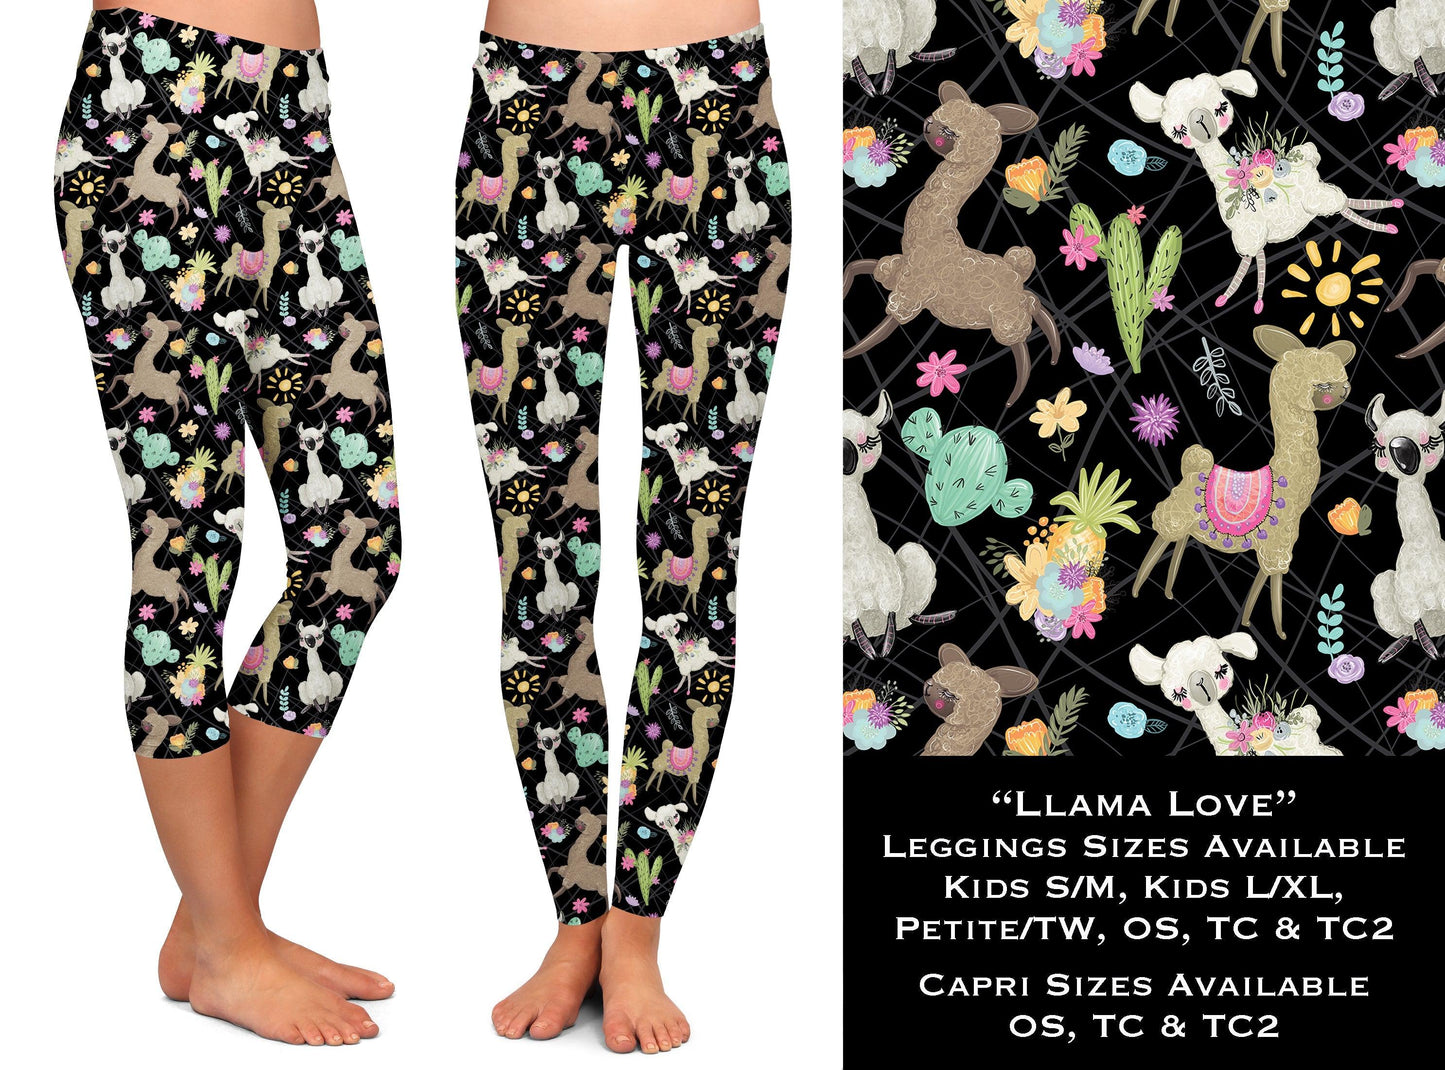 Llama Love - Legging & Capri - That’s So Fletch Boutique 